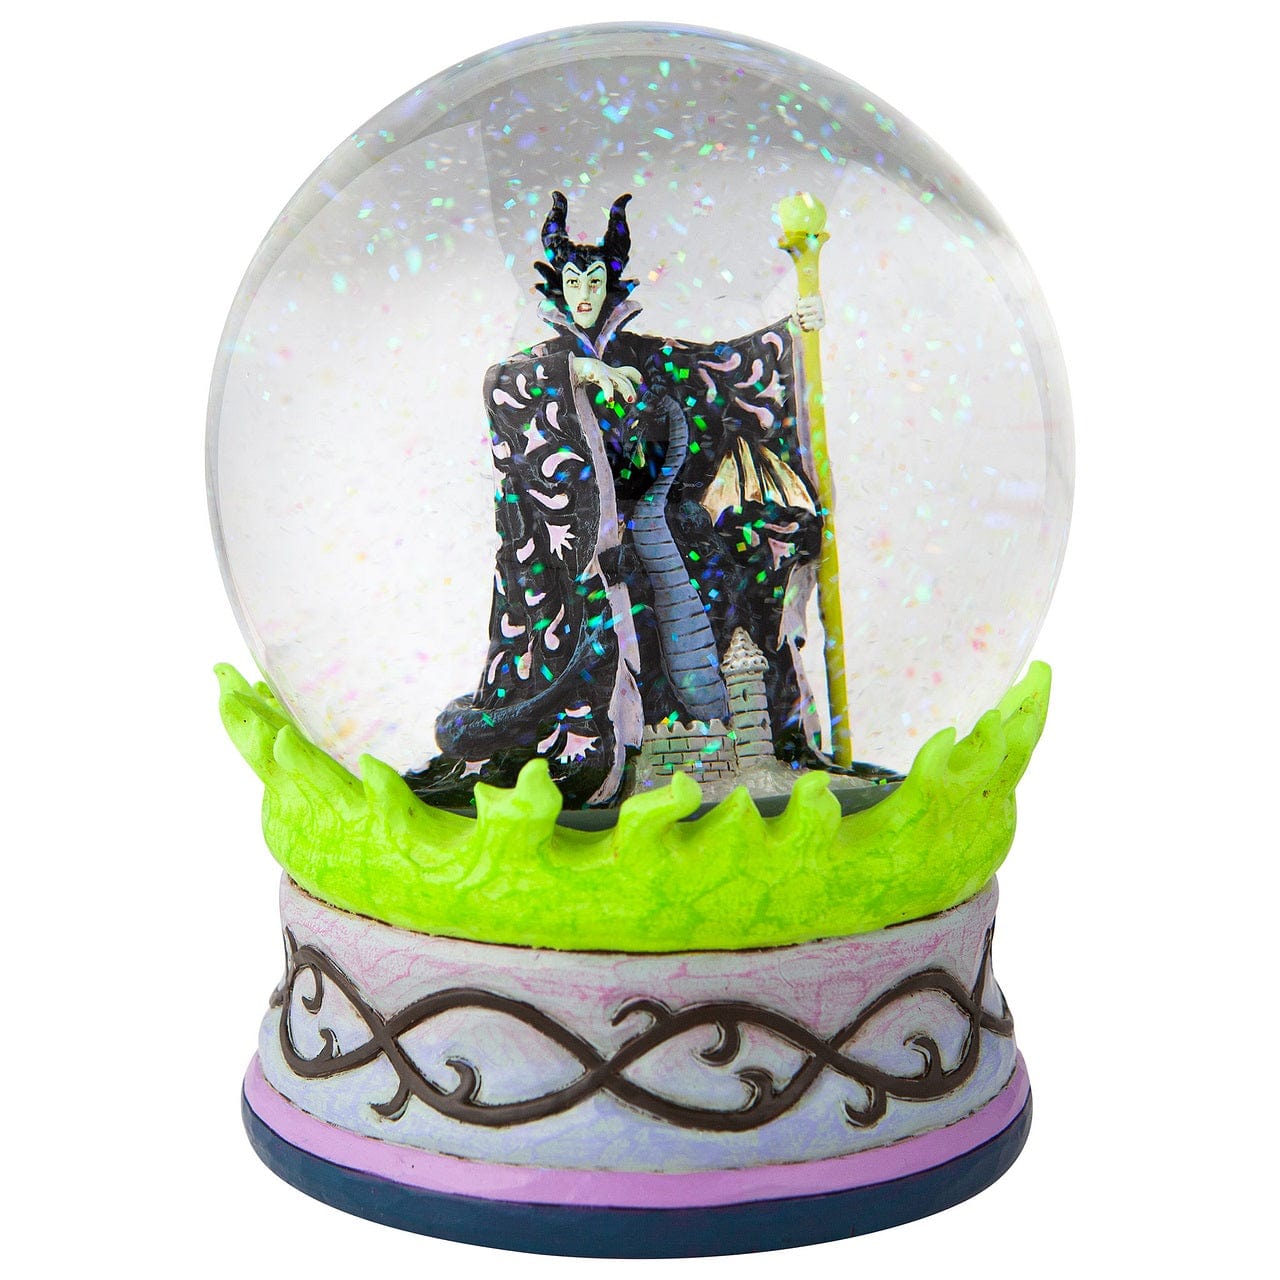 Enesco Disney Ornament Disney Traditions Figurine - Maleficent Waterball